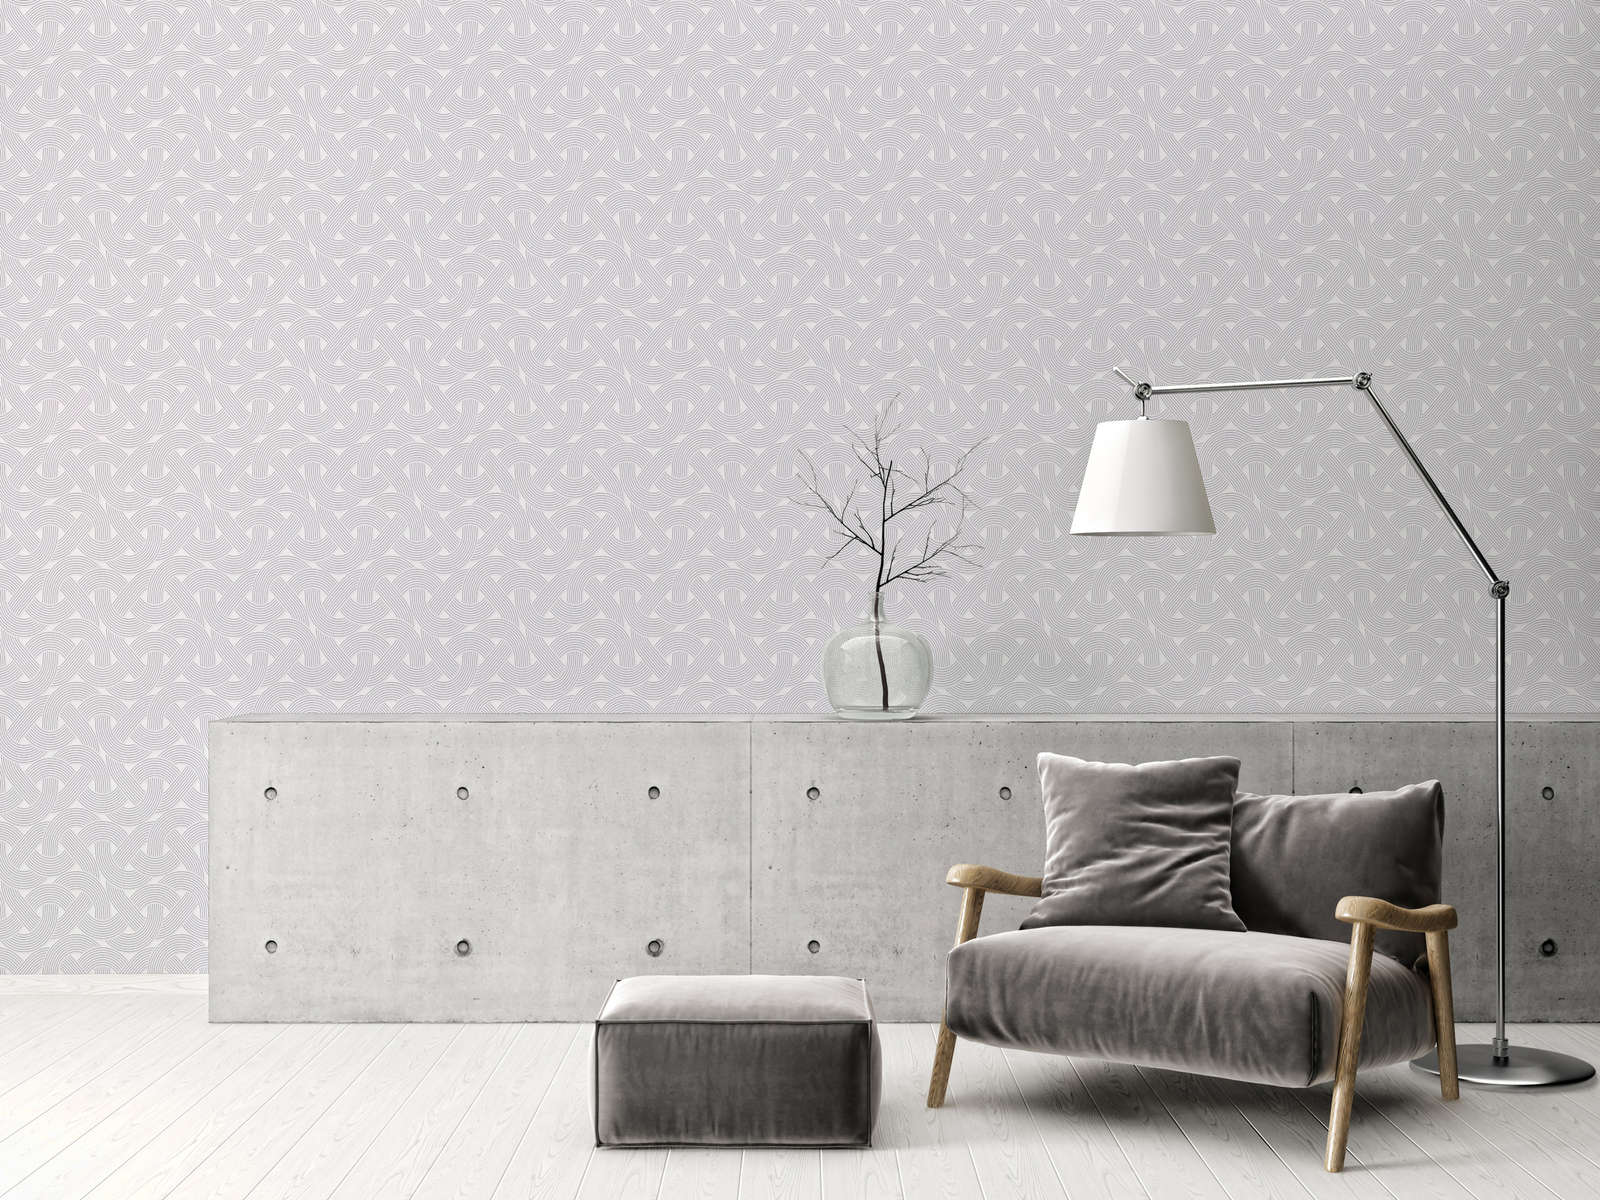             Non-woven wallpaper in graphic line pattern - grey, silver, white
        